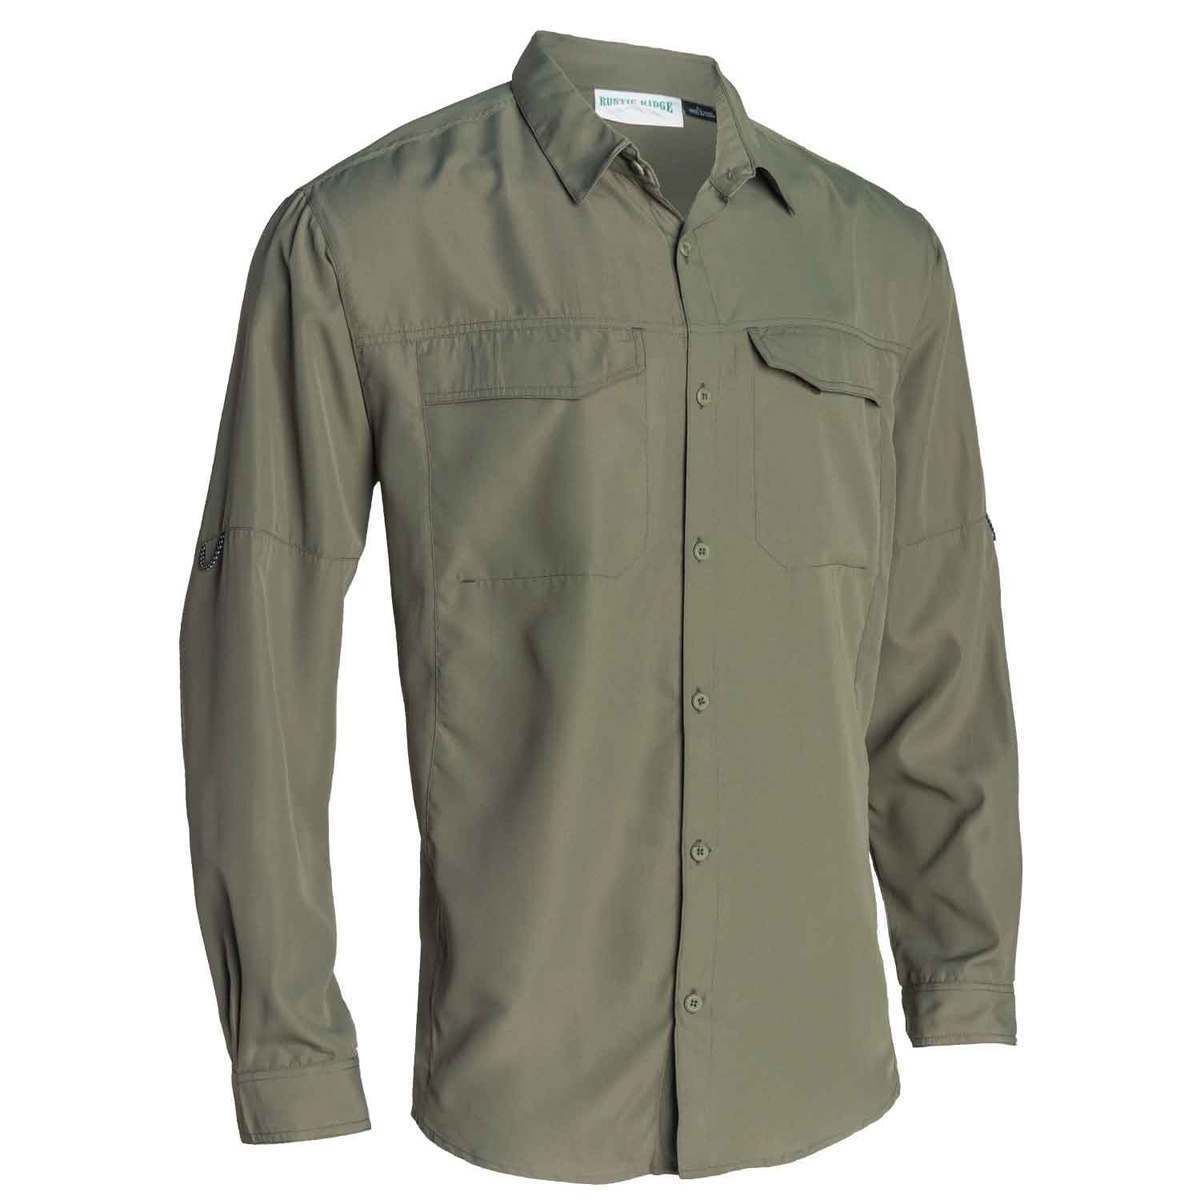 Rustic Ridge Men's Quest Long Sleeve Shirt | Sportsman's Warehouse